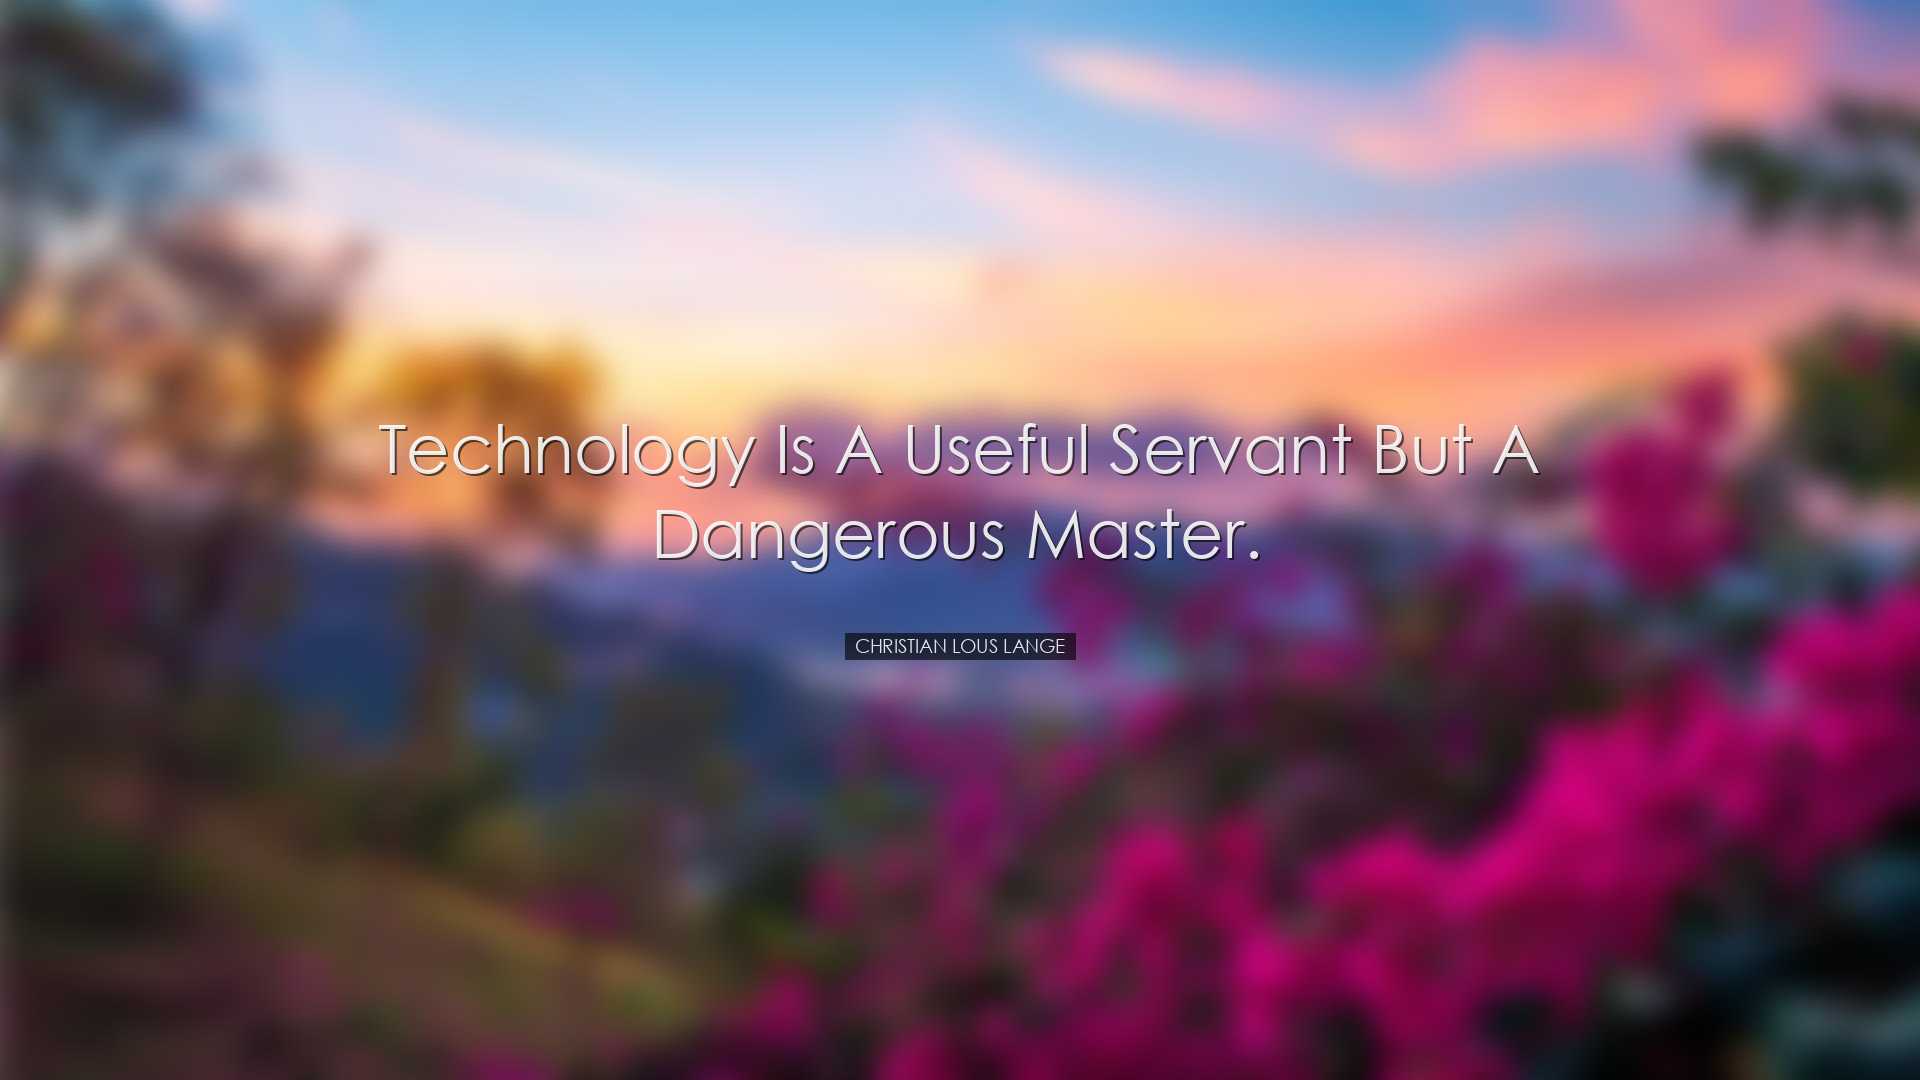 Technology is a useful servant but a dangerous master. - Christian